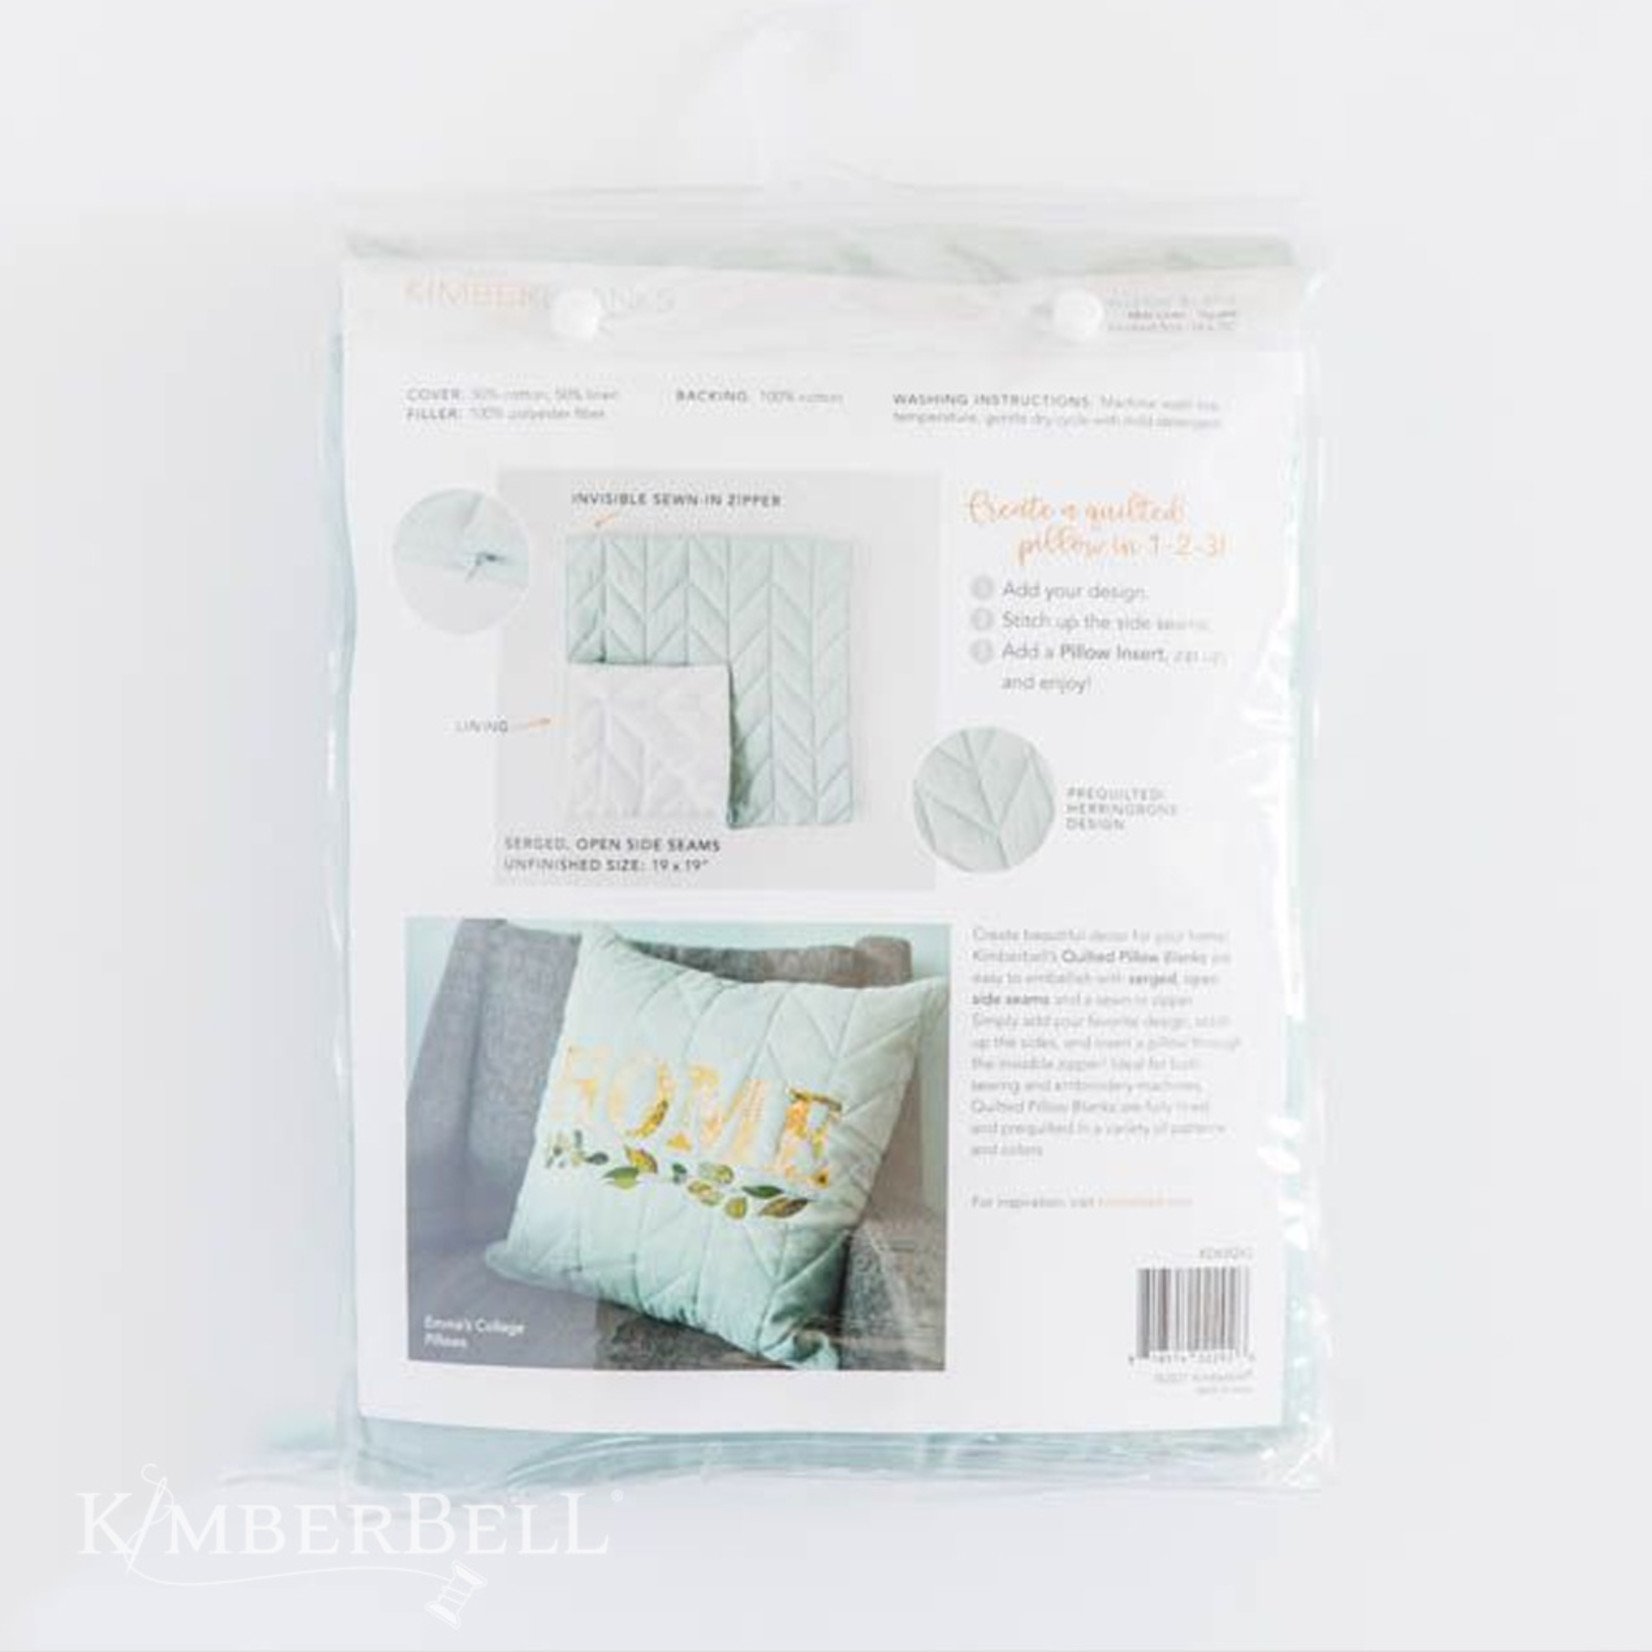 Kimberbell Designs Quilted Pillow Blank, 19"x19" Mist Blue Linen, Herringbone Quilting